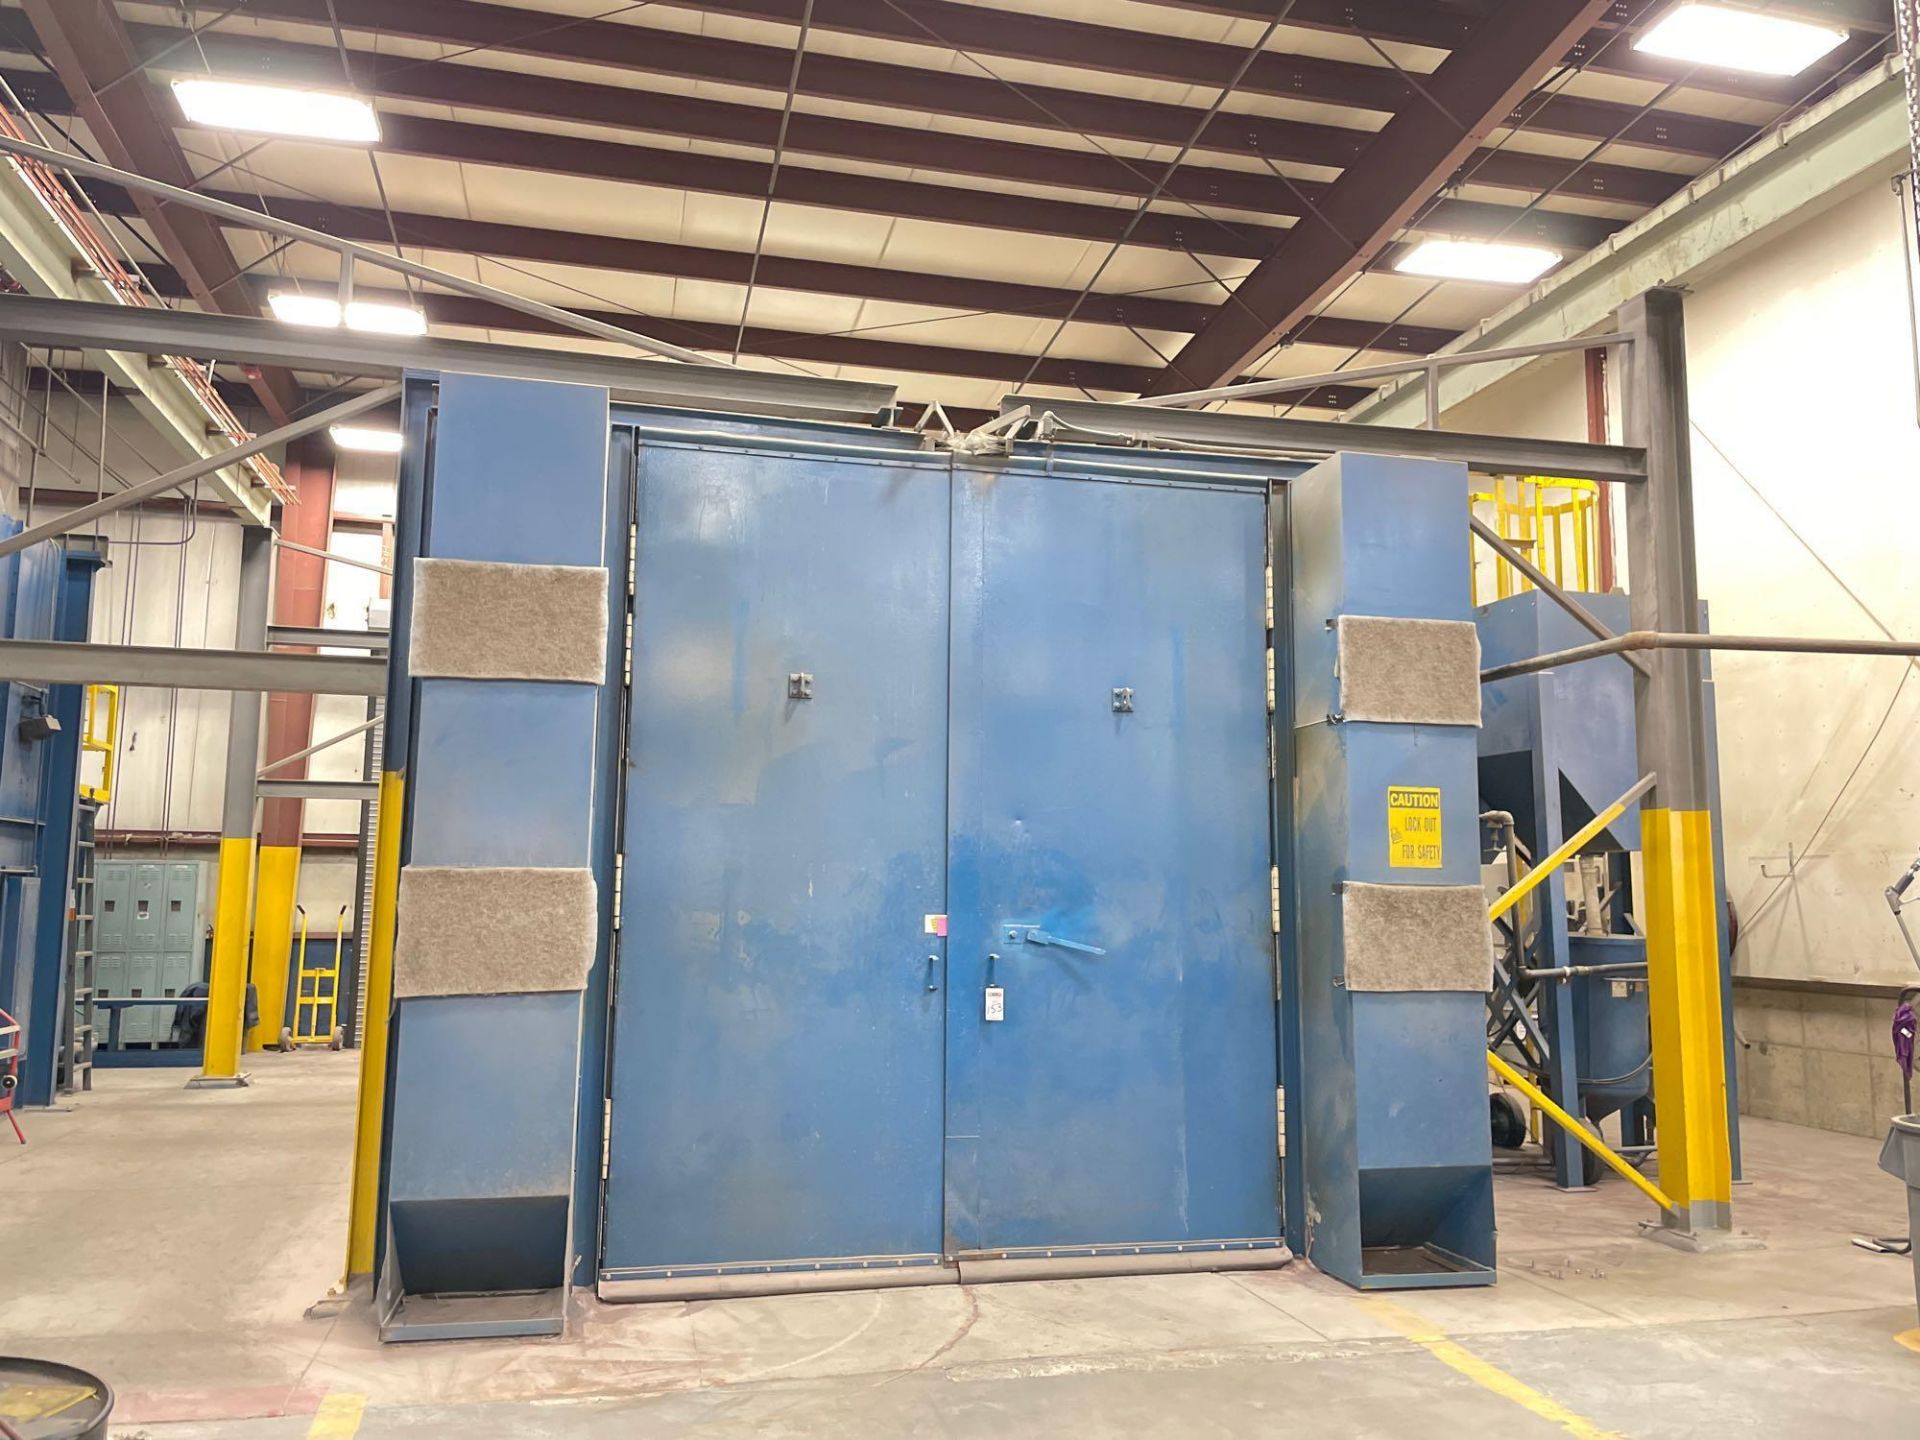 Hoffman Abrasive Blast booth, approx 18' x 12' x 12'h, perforated floor, media conveyor, elevator